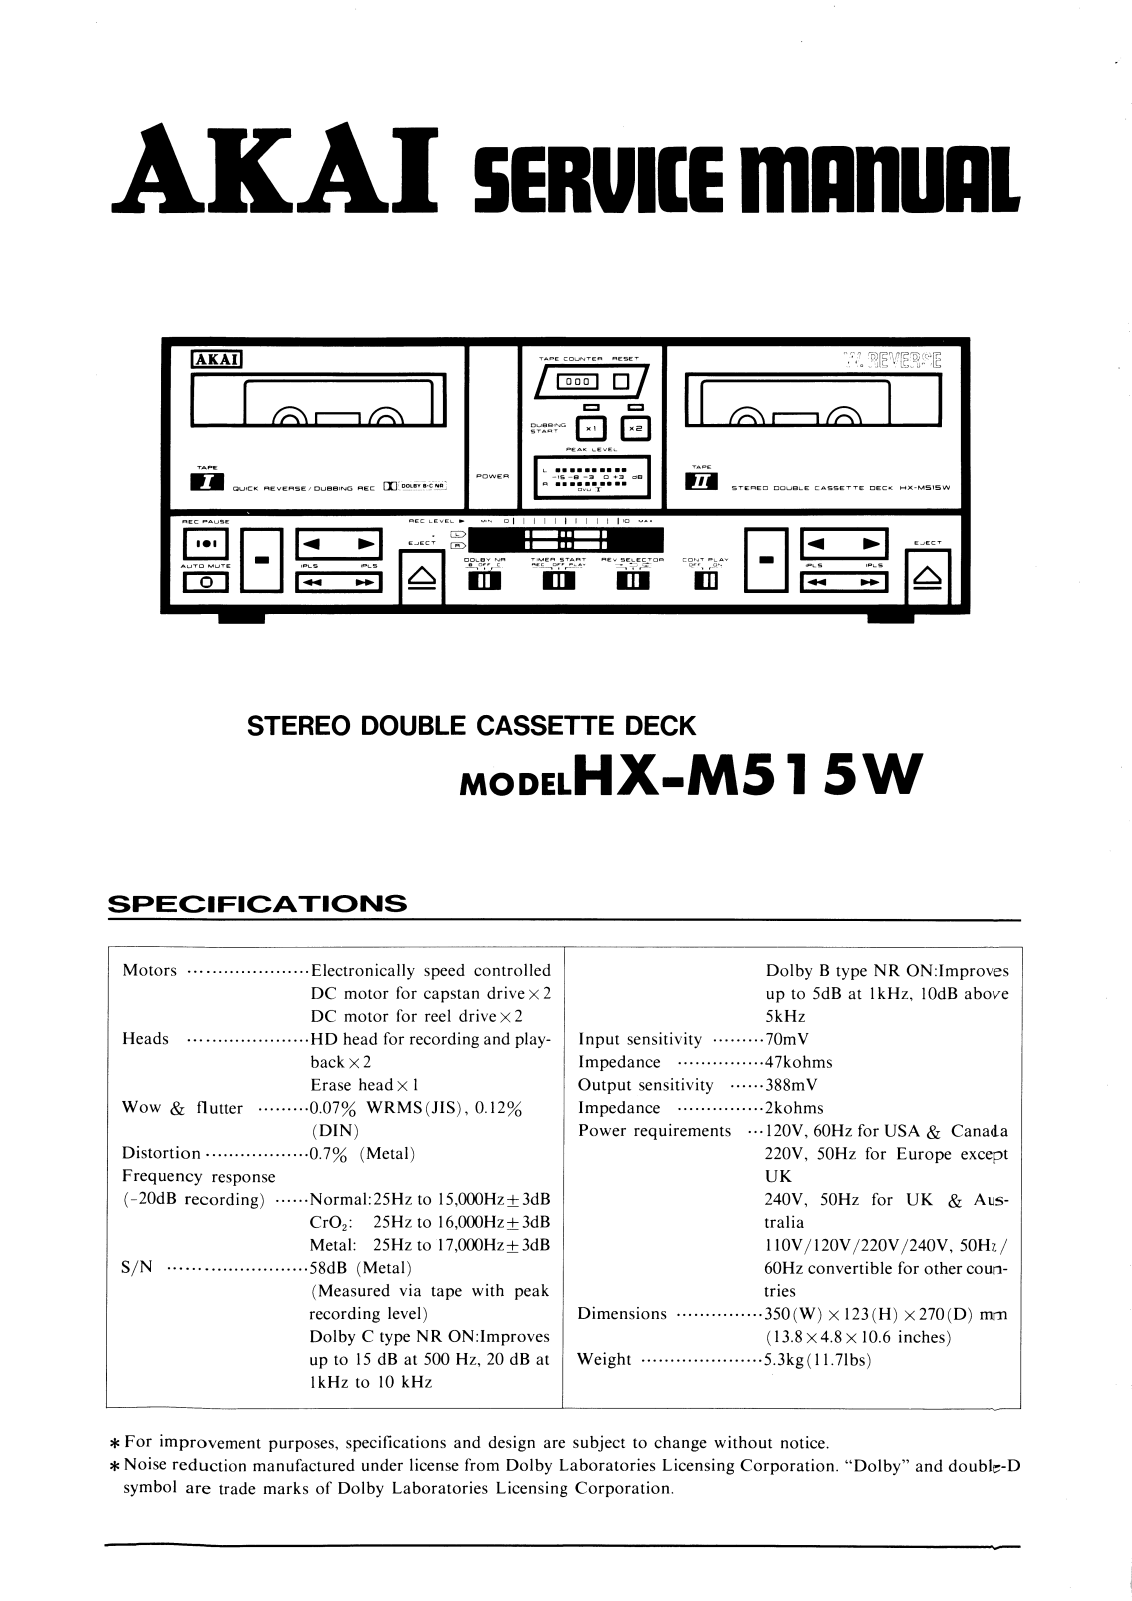 Akai HXM-515-W Service manual